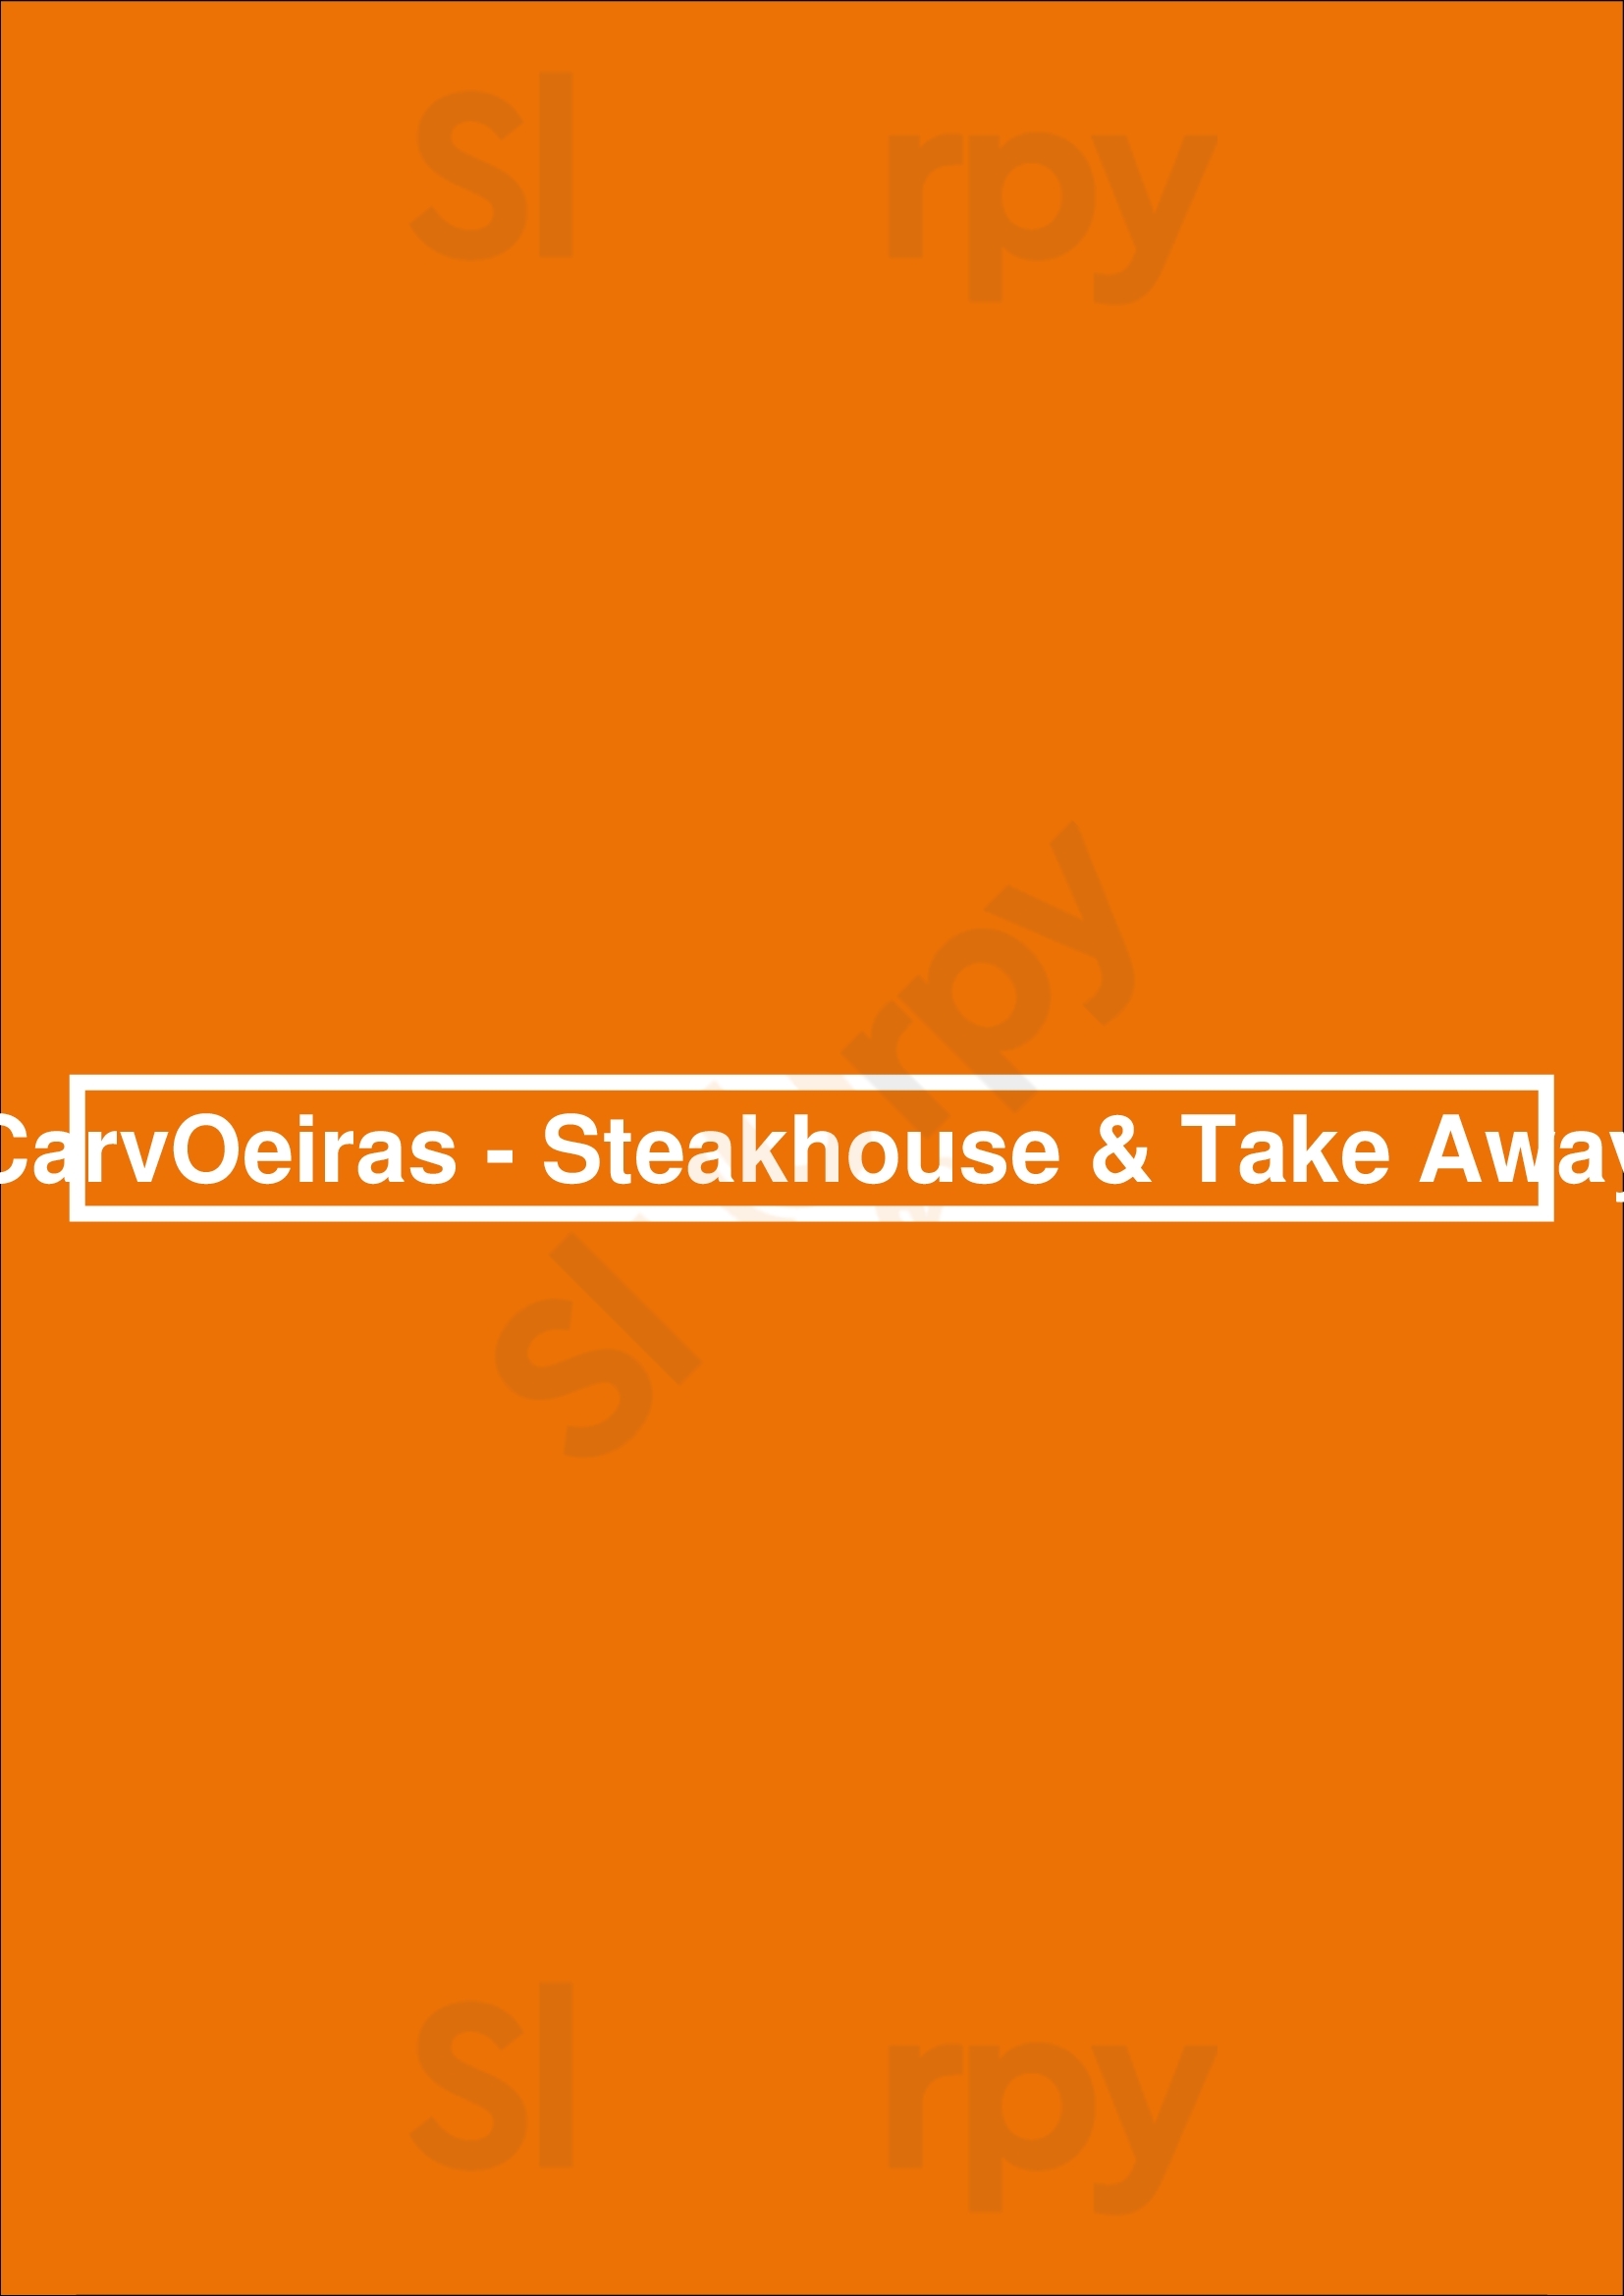 Carvoeiras - Steakhouse & Take Away Oeiras Menu - 1